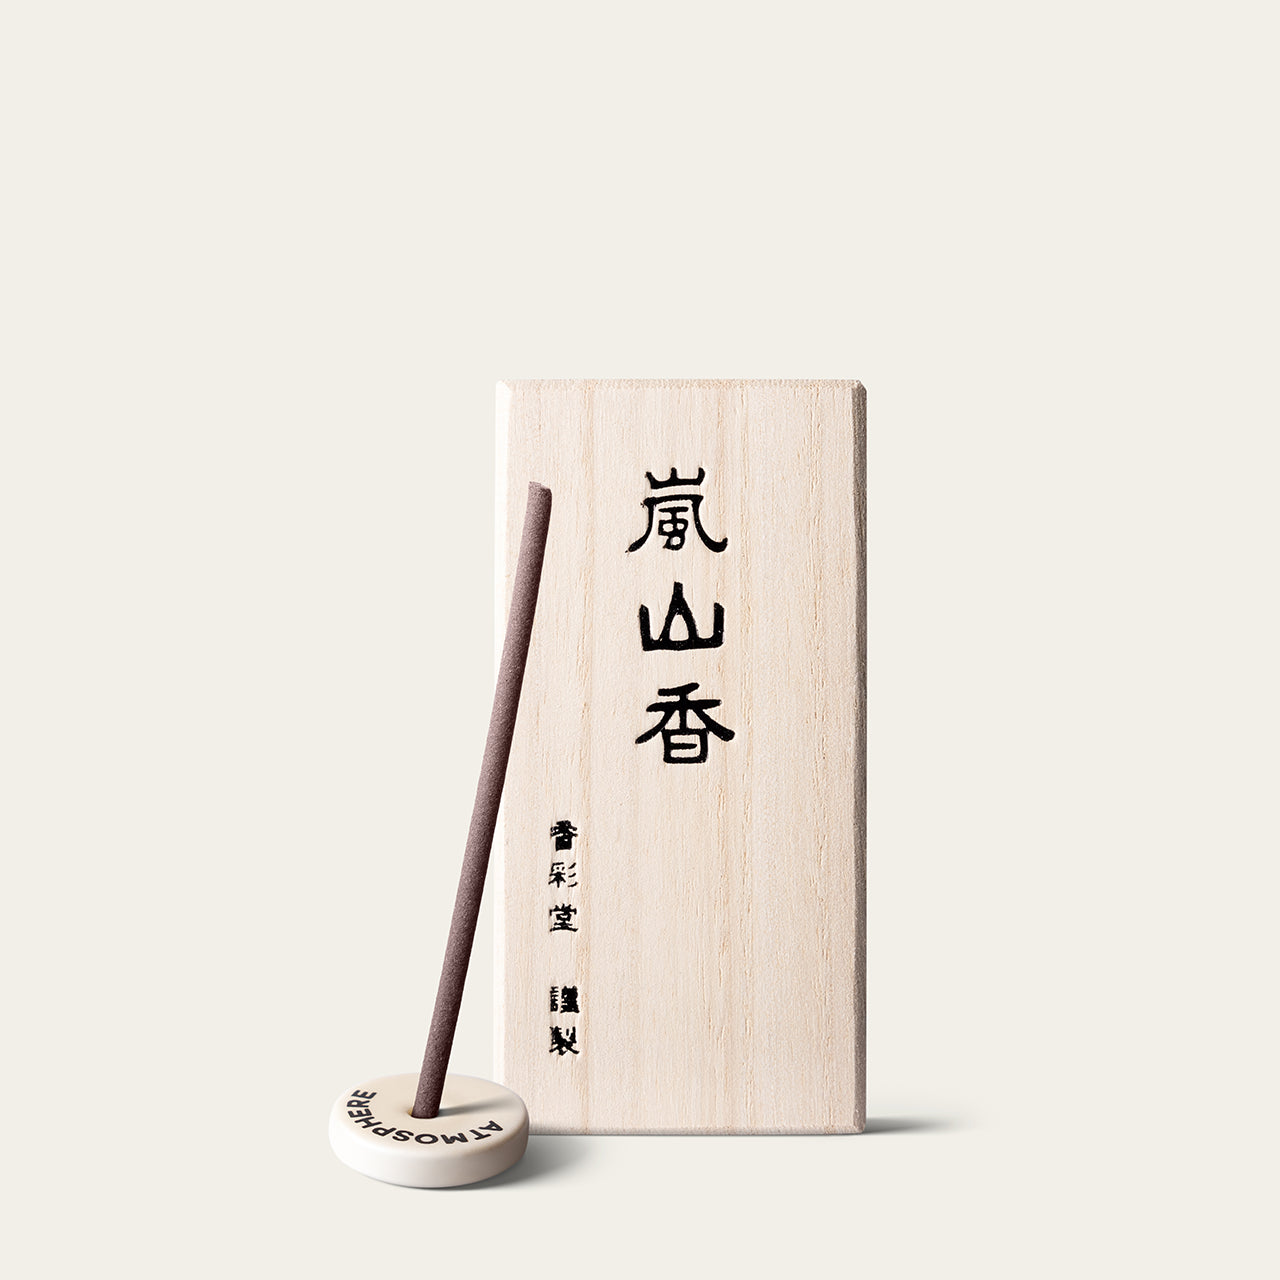 Kousaido Scenic Charm Moonlit Arashiyama Japanese incense sticks (30 sticks) with Atmosphere ceramic incense holder